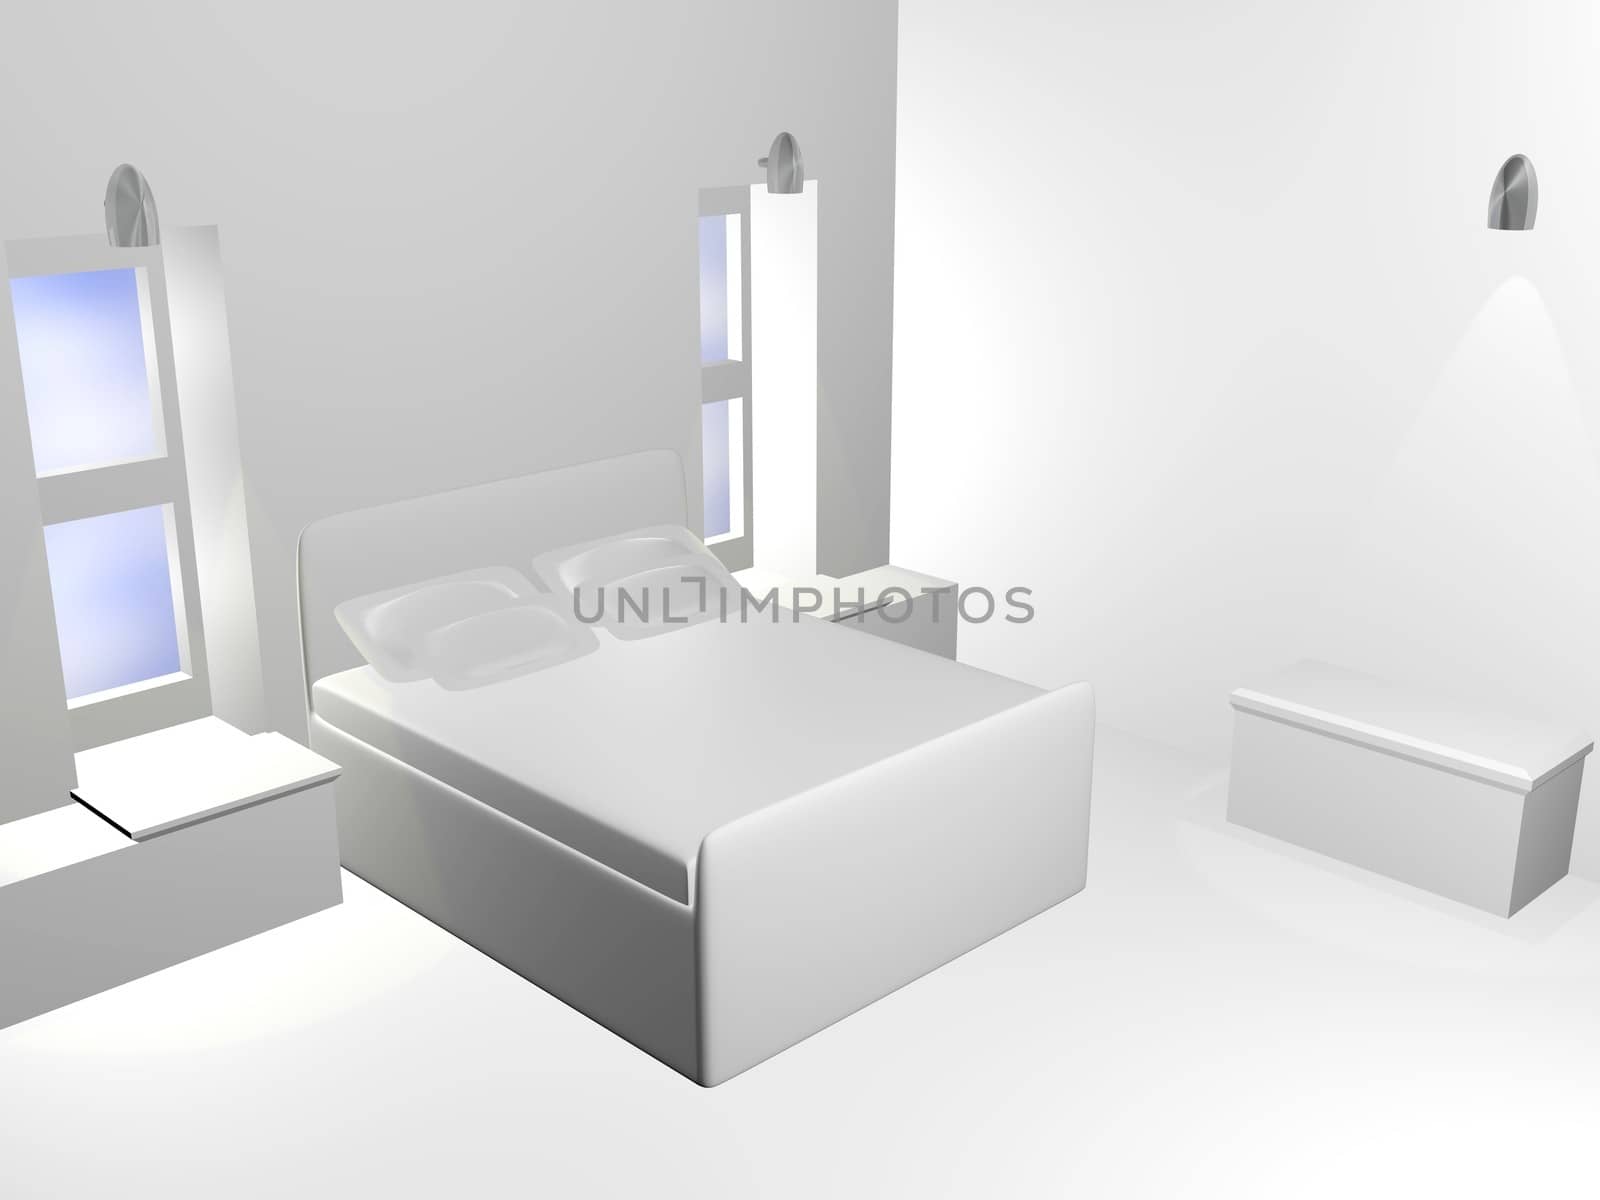 A simple 3d bedroom scene in white
